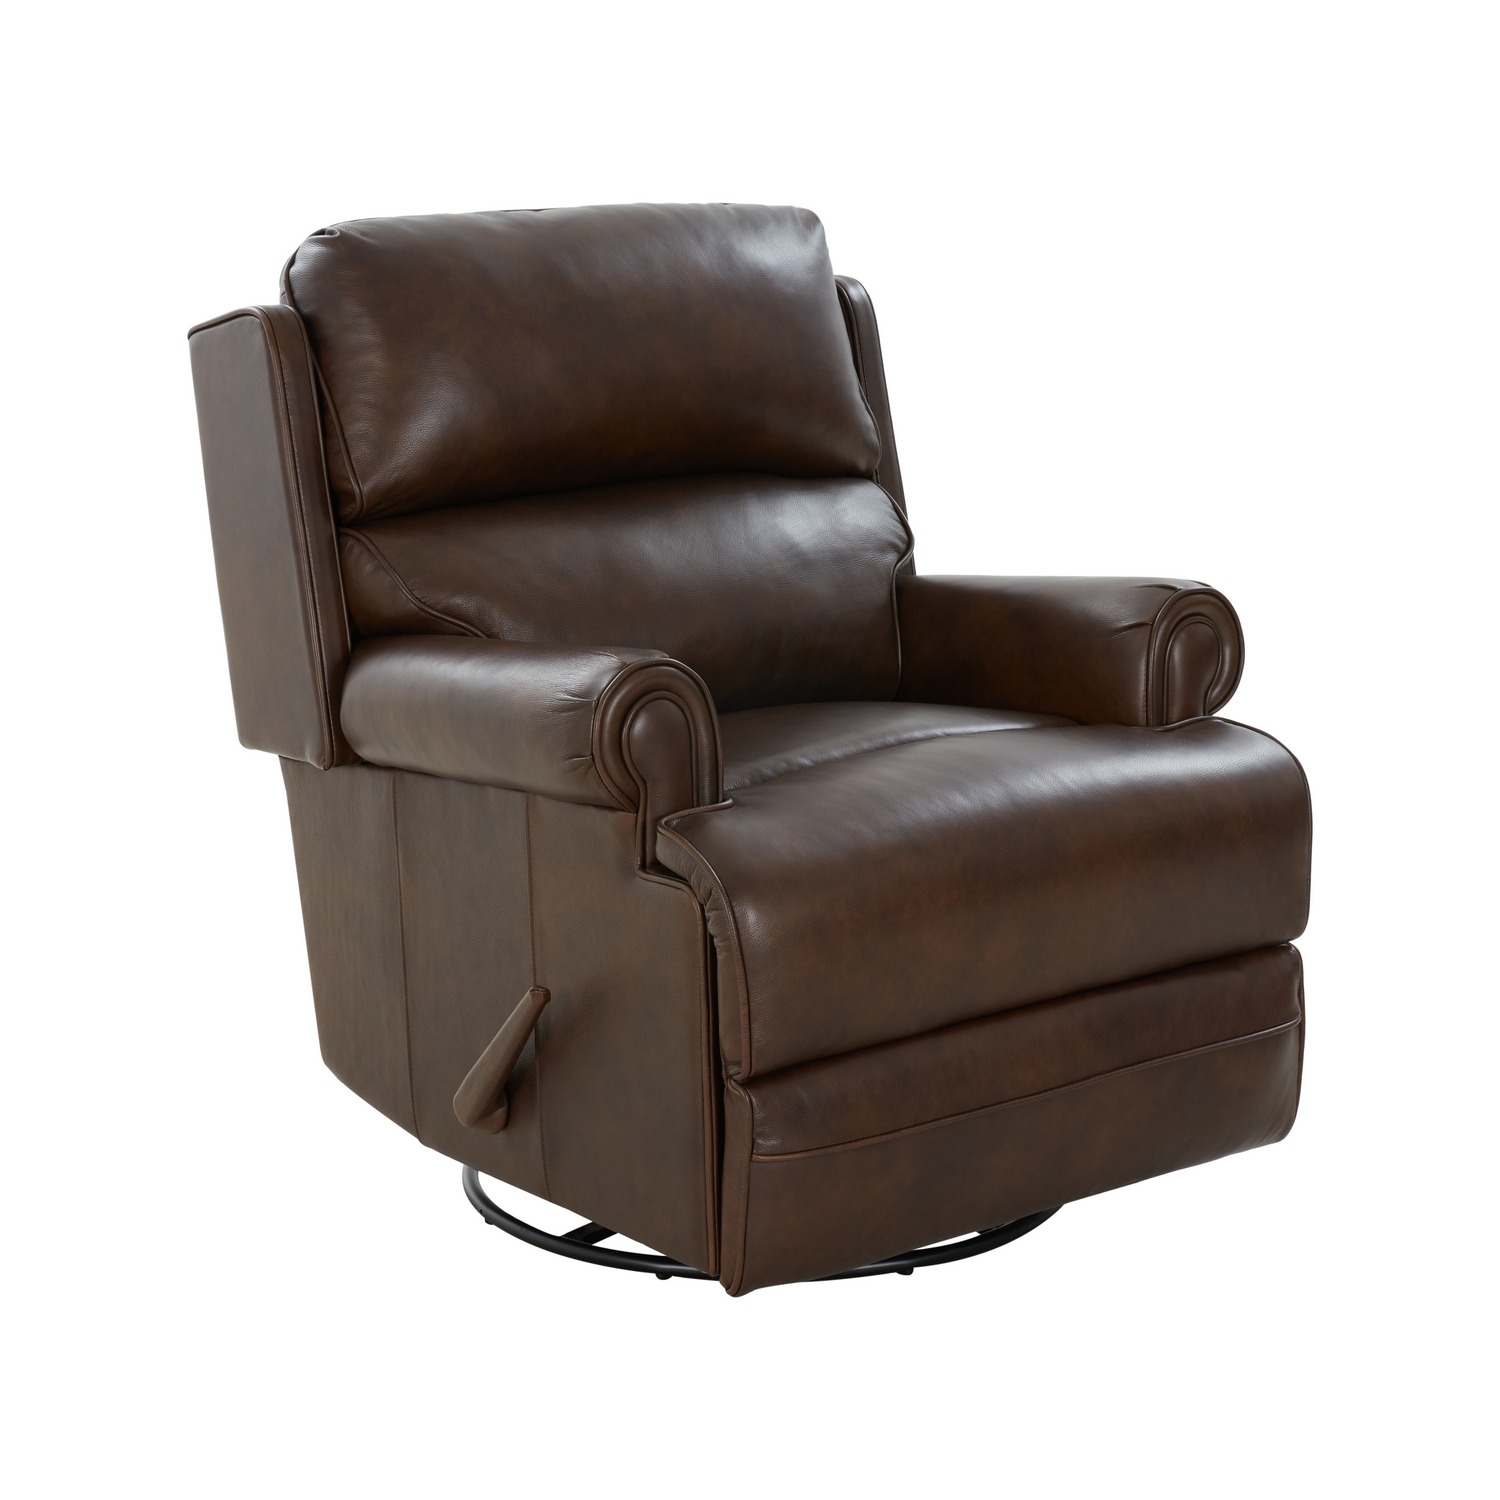 Barcalounger The Club Swivel Glider Recliner Chair - Ashford Walnut/All Leather